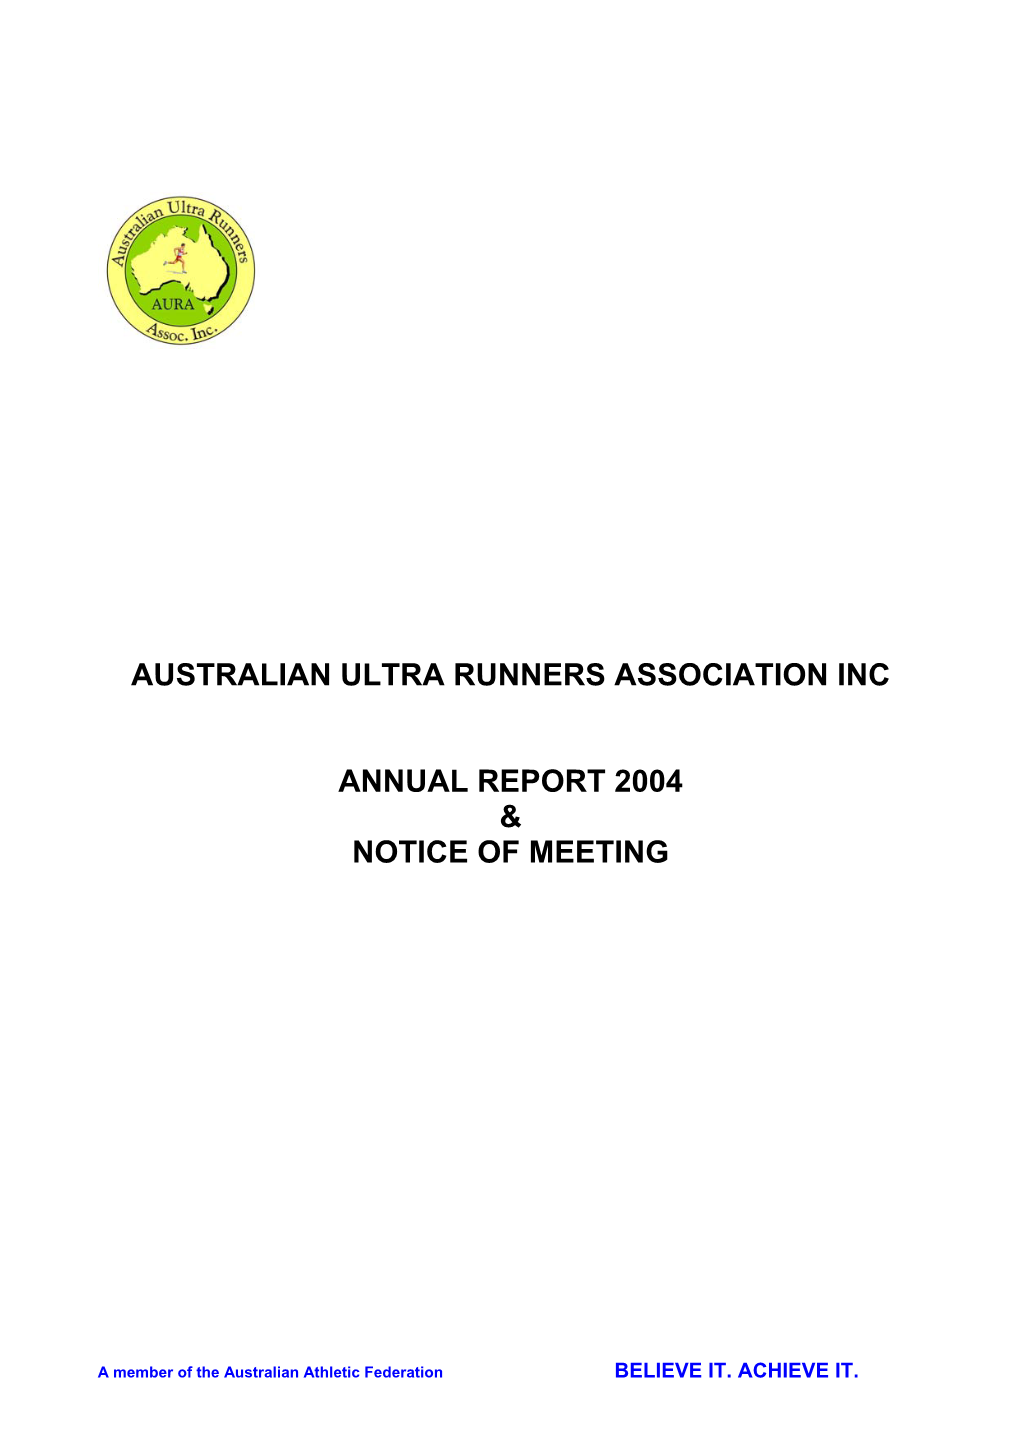 Australian Ultra Runners Association Inc Annual Report 2004 & Notice of Meeting